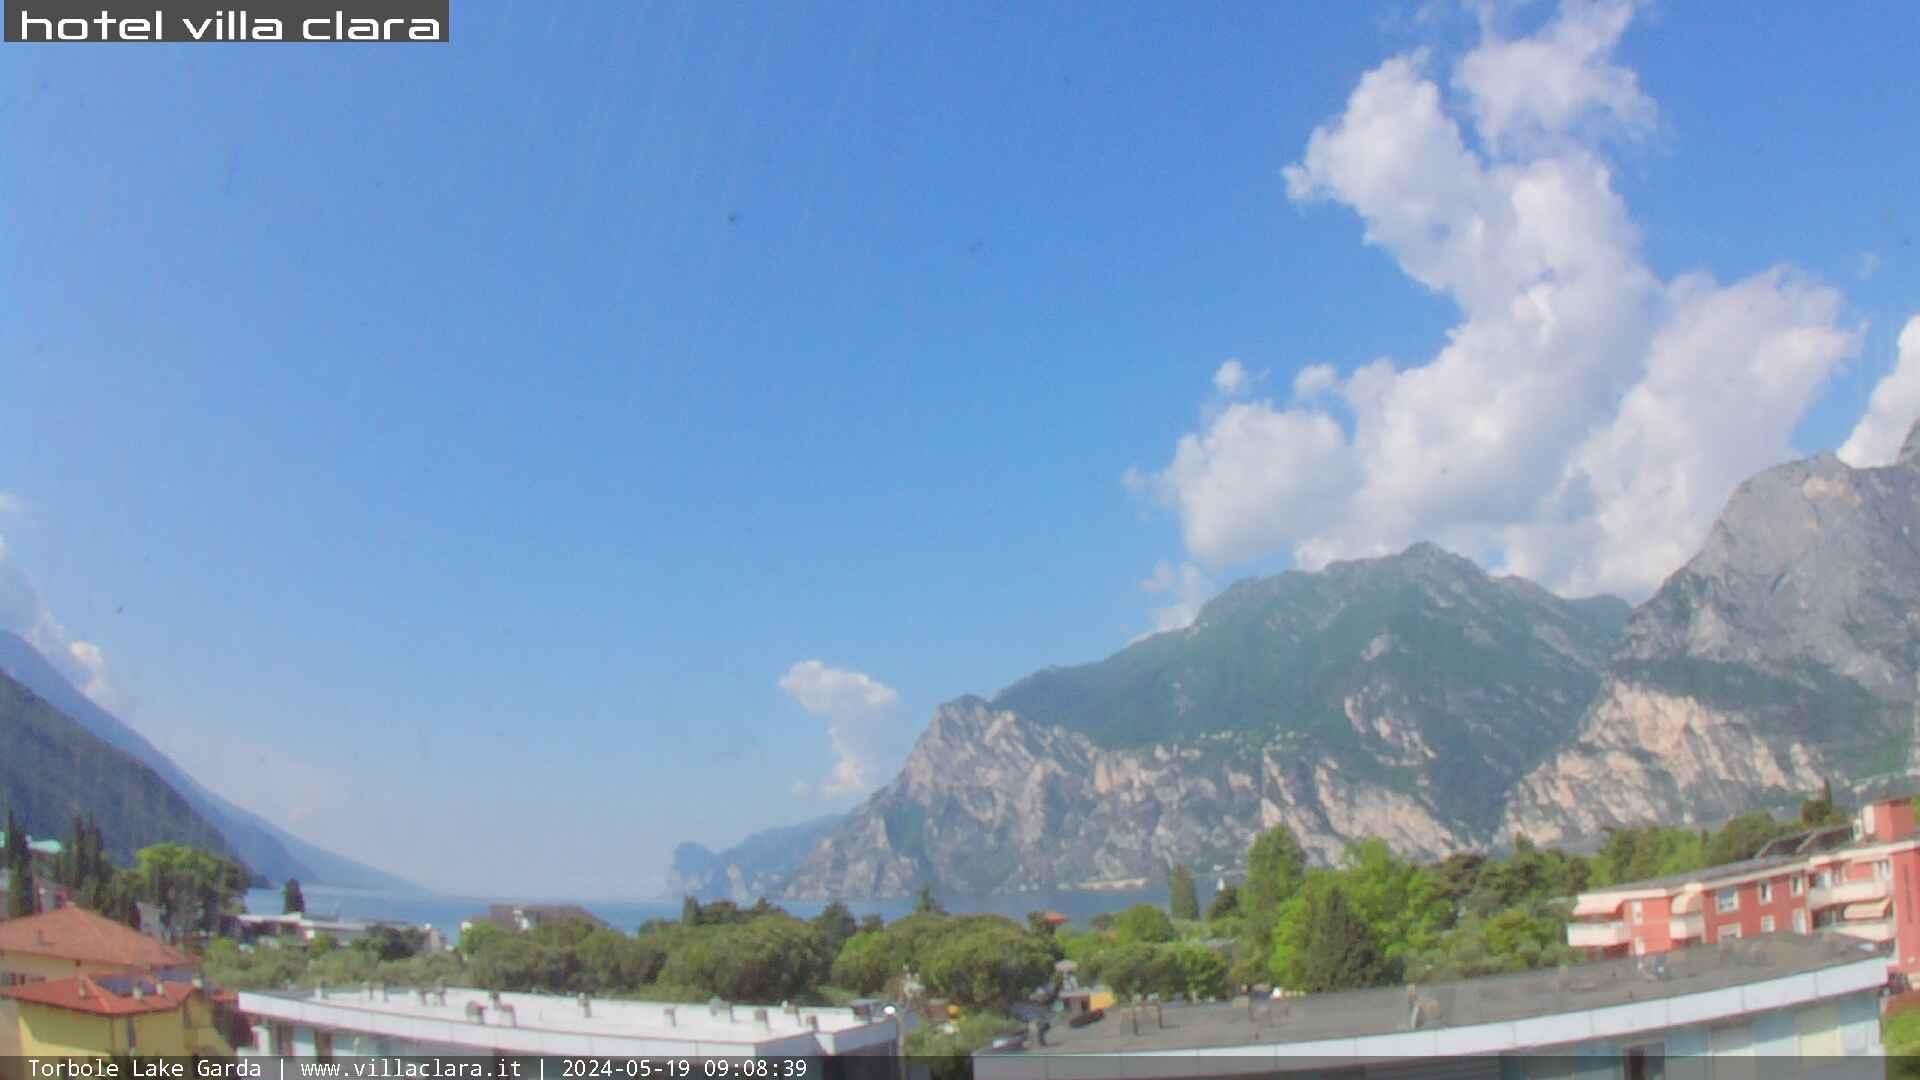 Lago di Garda (Torbole) Sab. 10:08